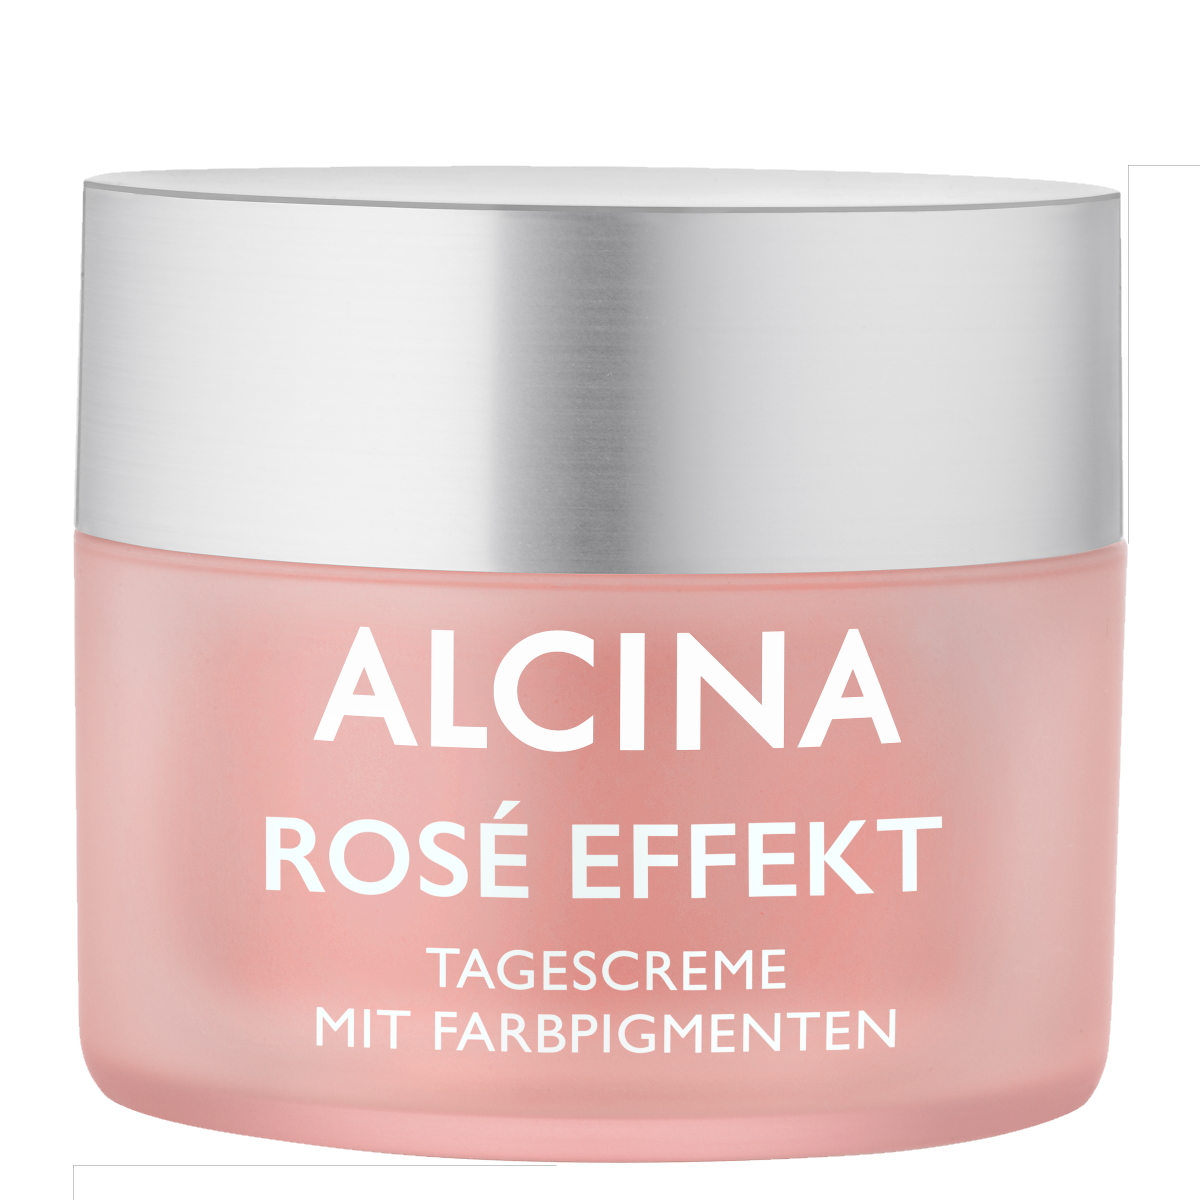 Alcina Rosé Effekt Tagescreme 50ml